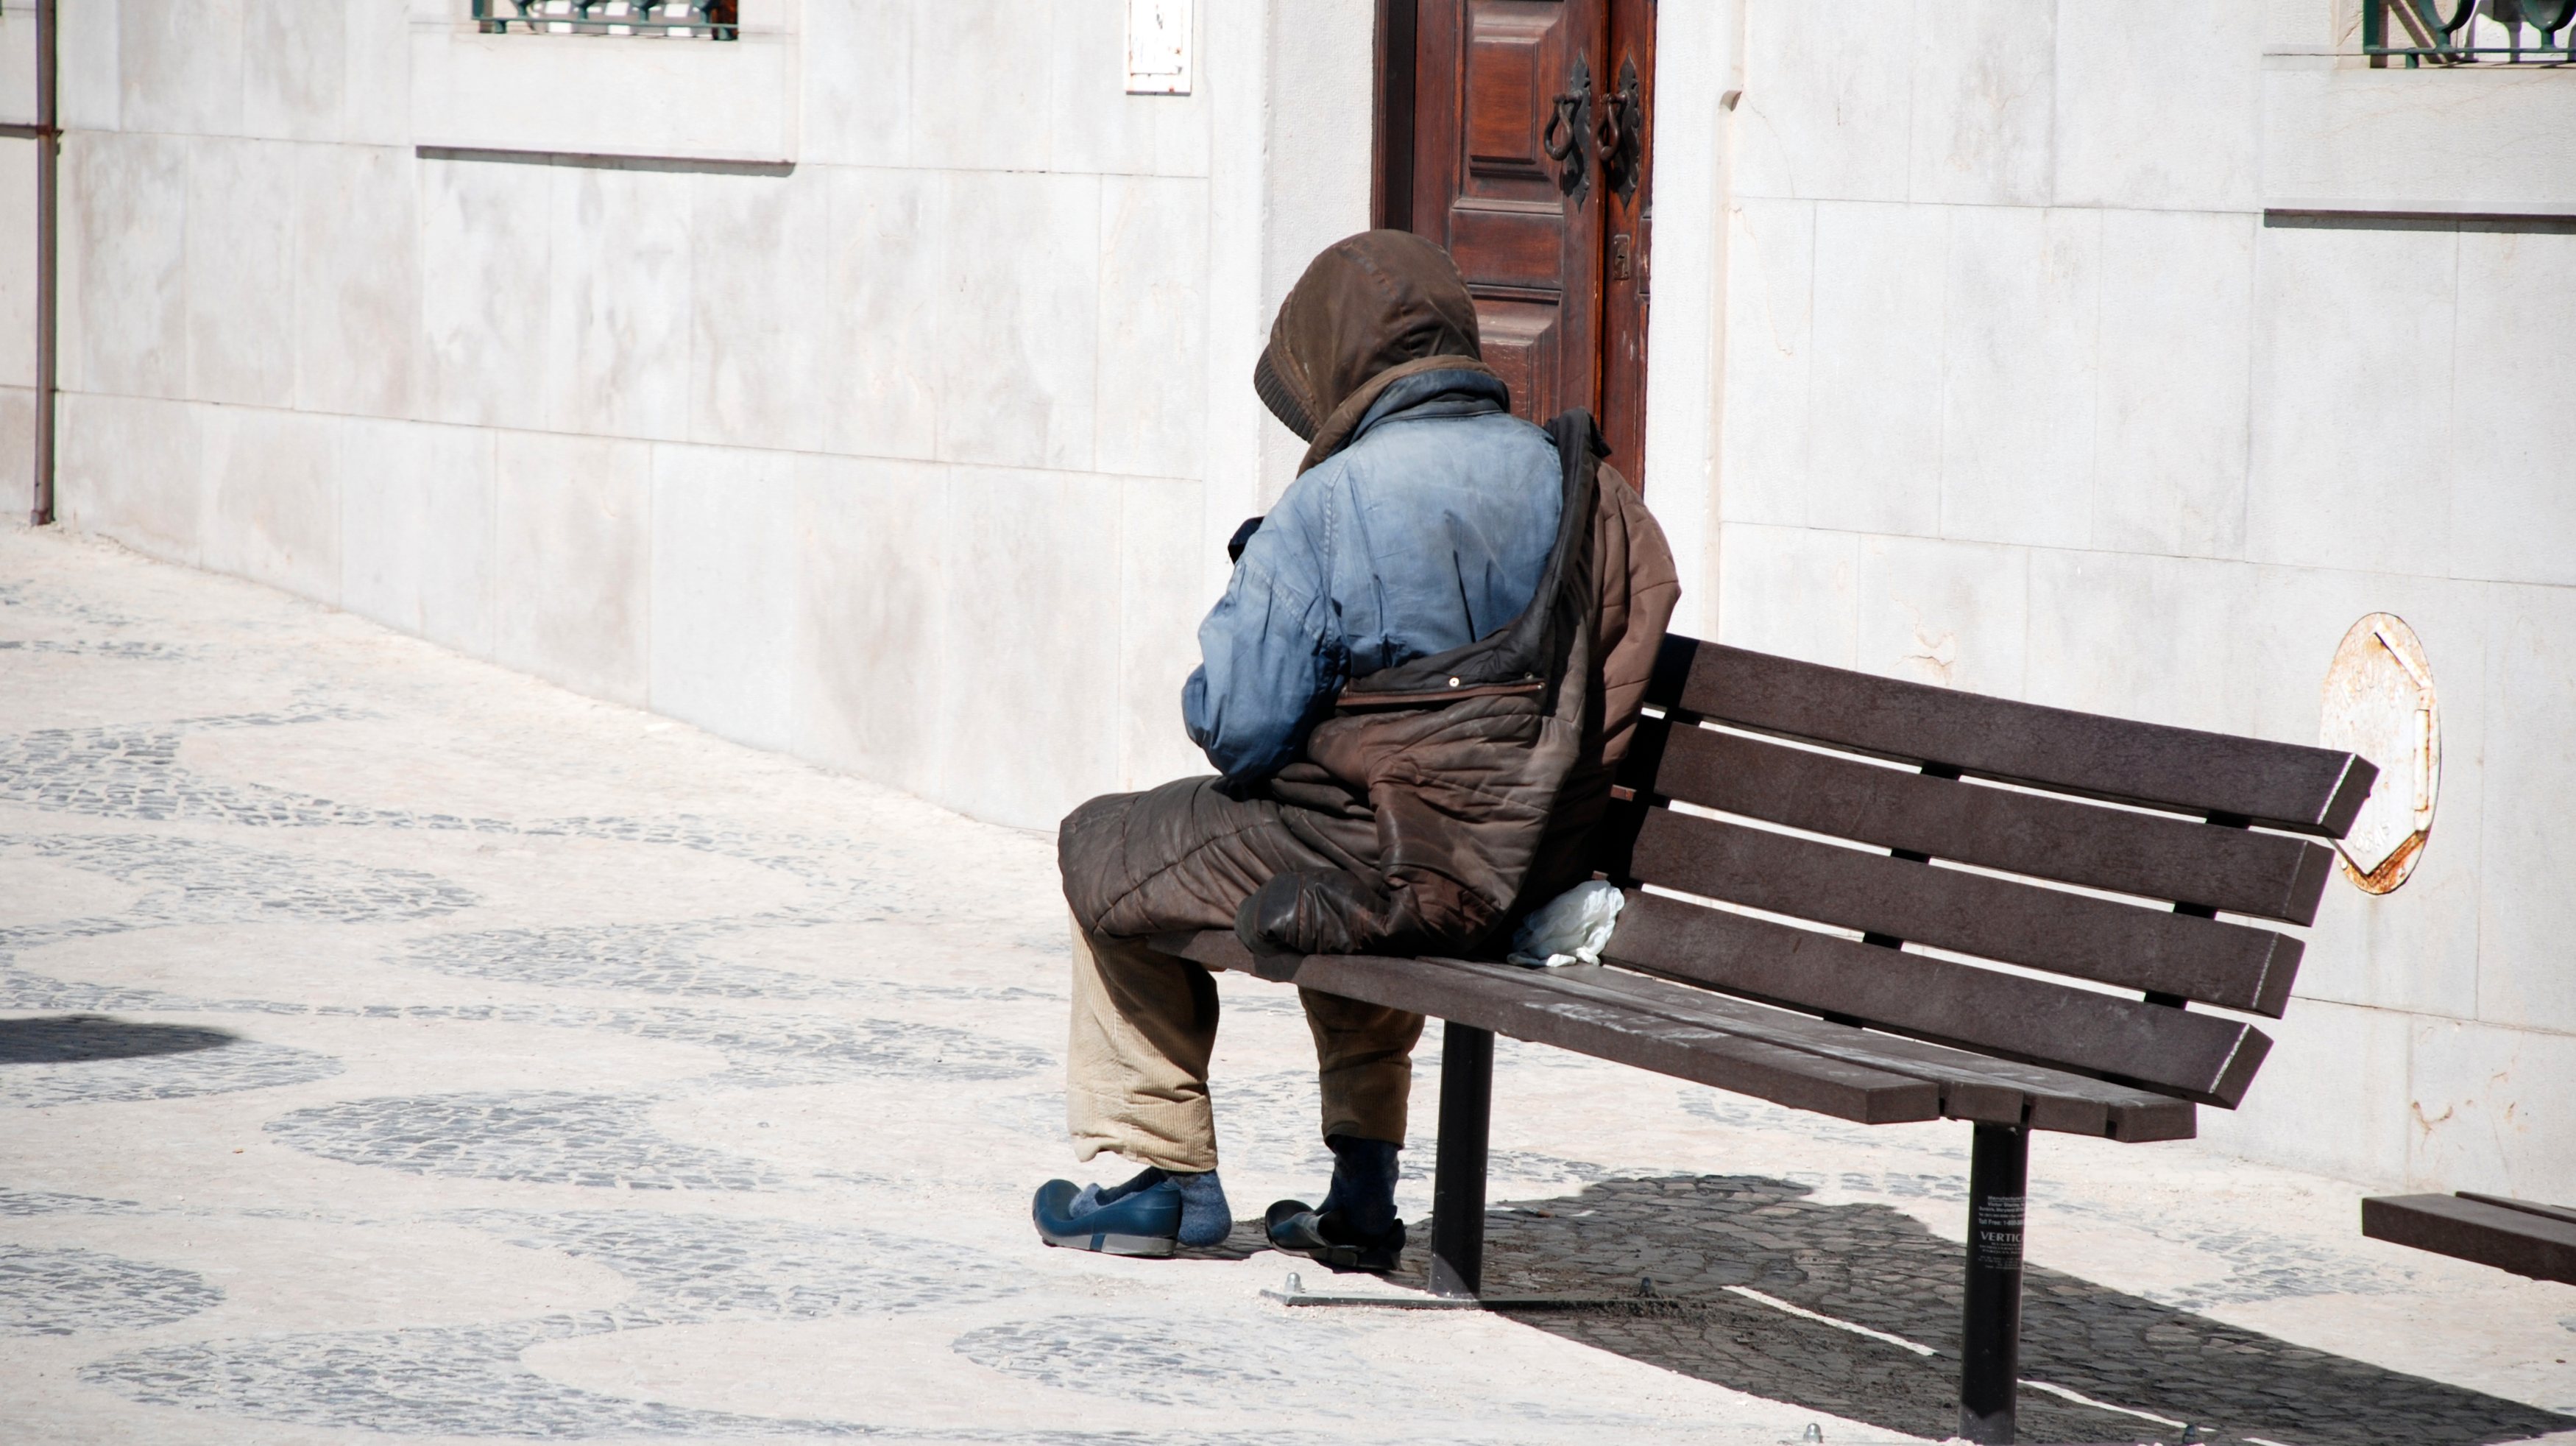 Homeless man on bench in Lisbon, Portugal.